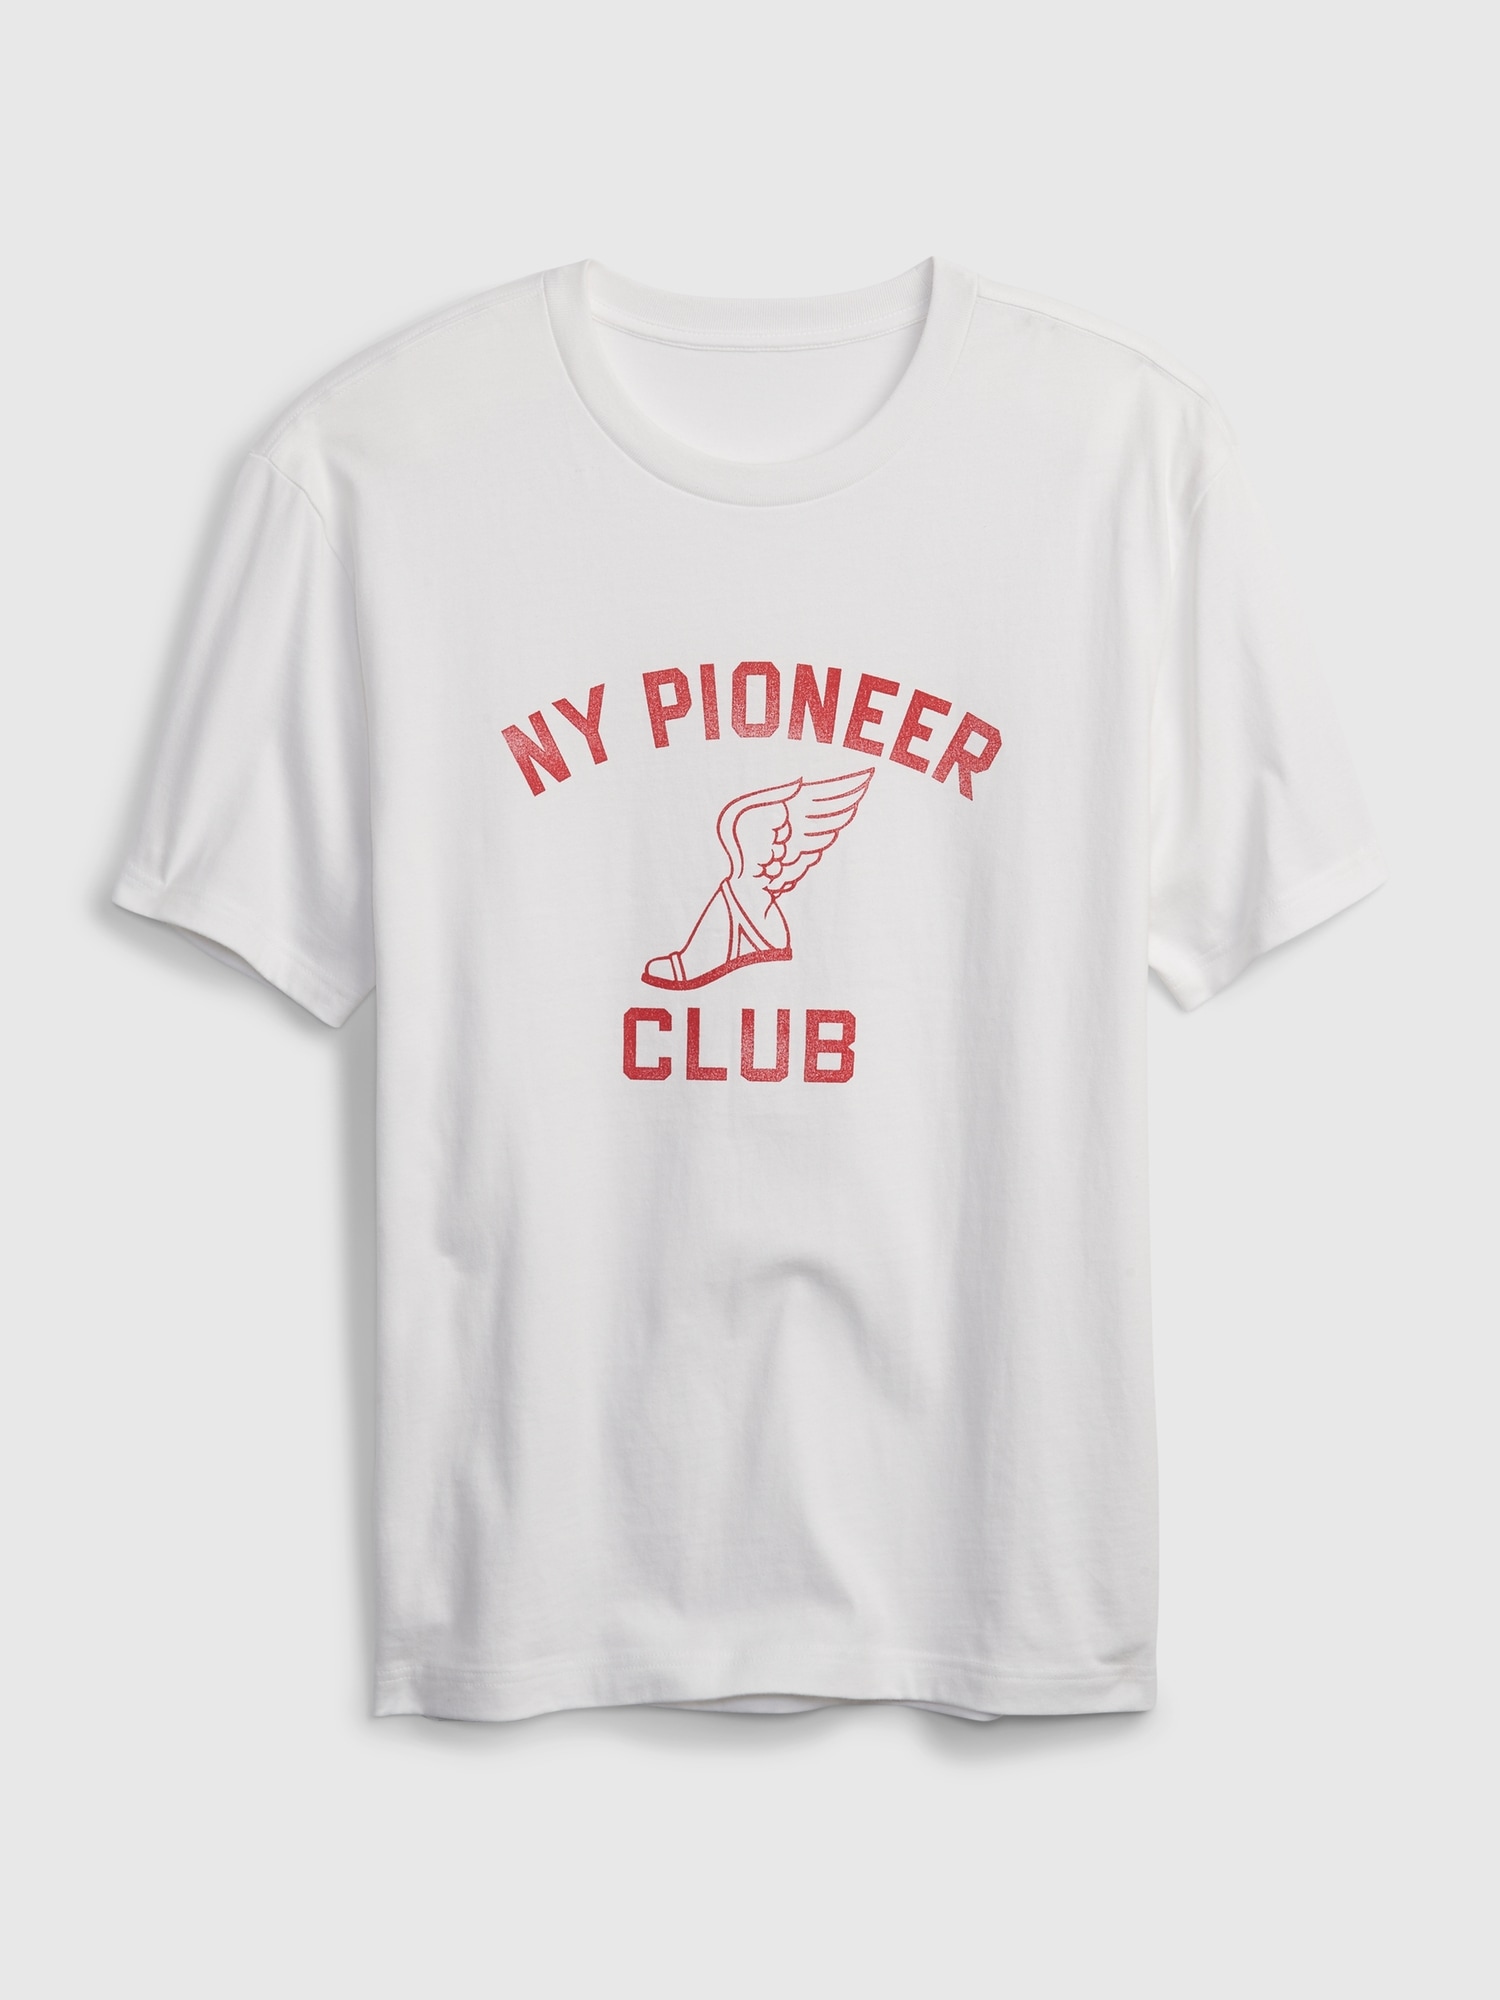 Adult Gap x New York Pioneer Club 100% Organic Cotton Graphic T-Shirt | Gap